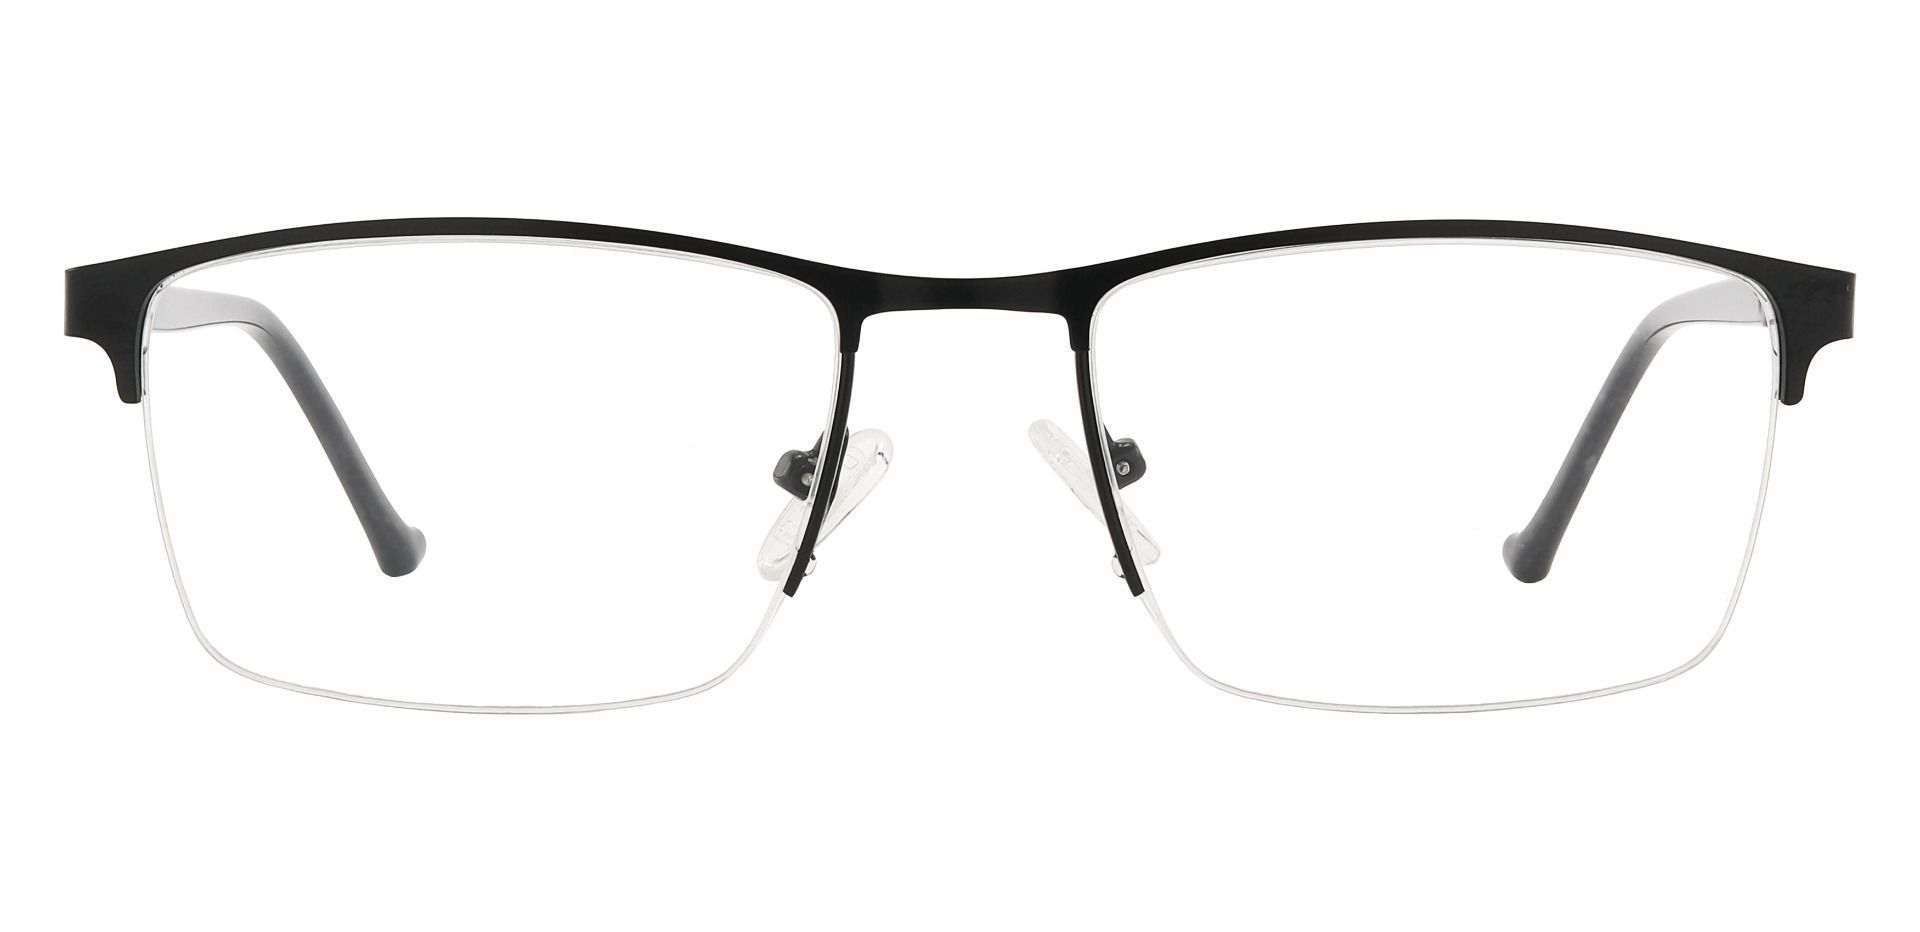 Arbor Rectangle Lined Bifocal Glasses - Black